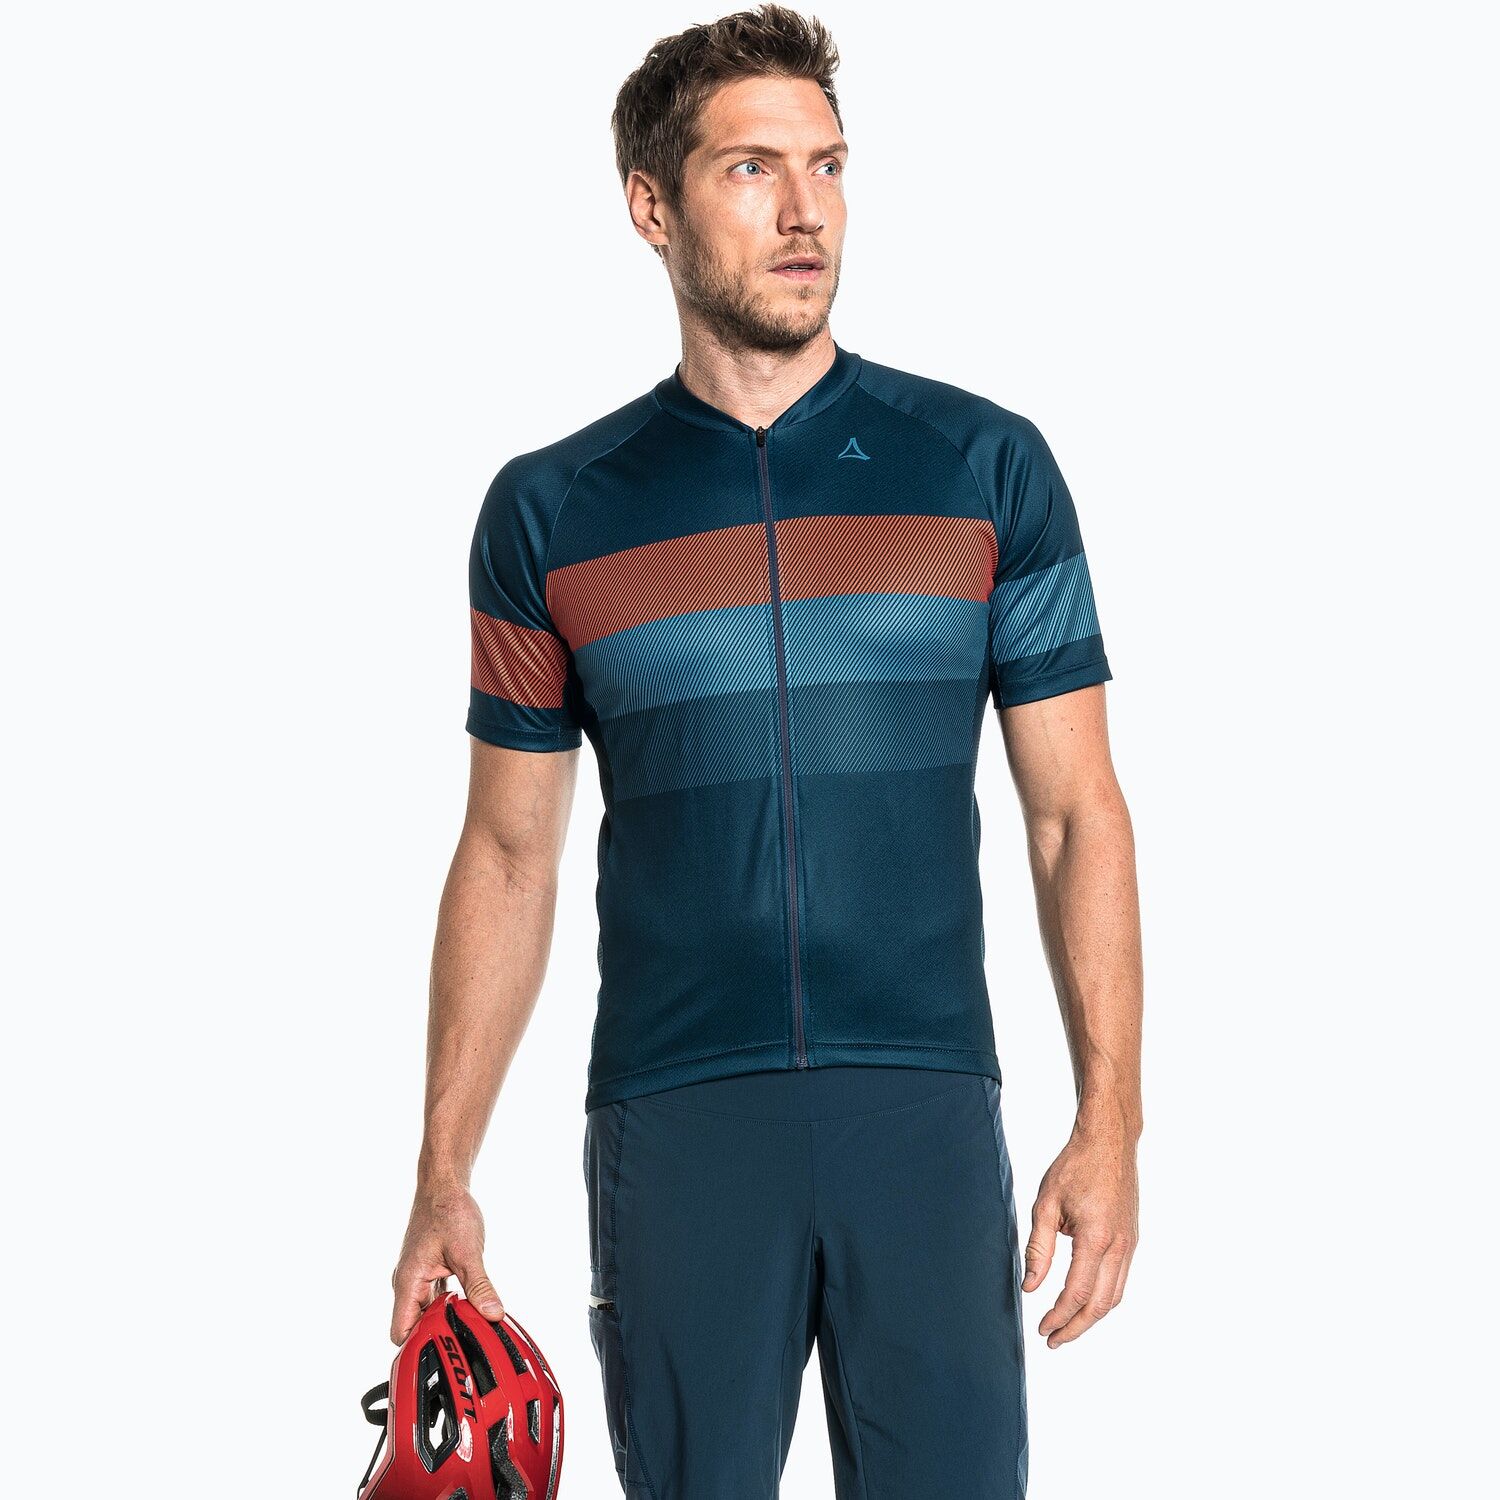 Schöffel Shirt Vertine - Cycling jersey - Men's